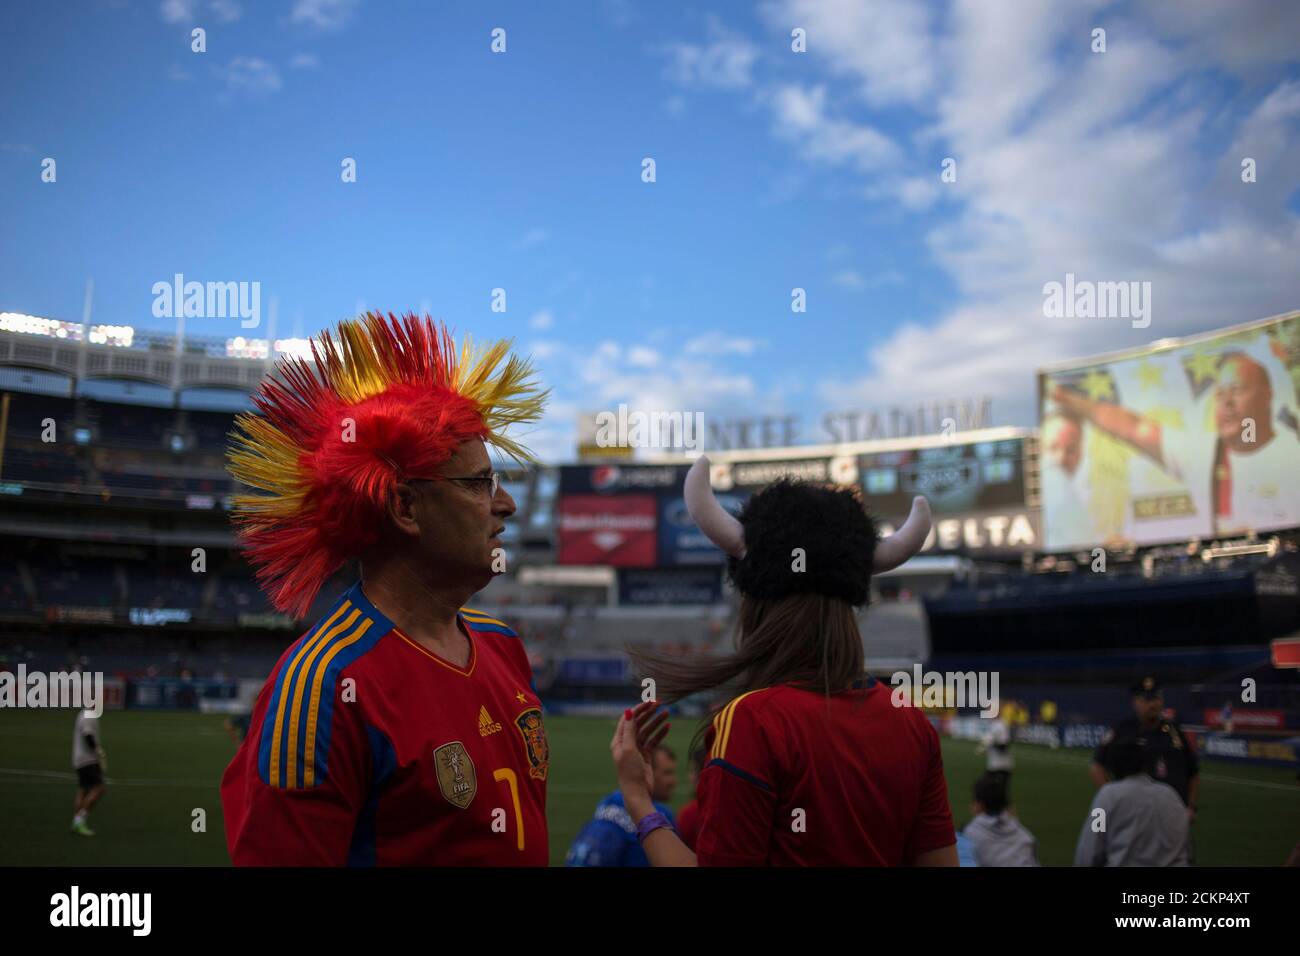 Spanish soccer fan Joe Villarino awaits the start of Spain's international friendly against Ireland at Yankee Stadium in New York June 11, 2013. REUTERS/Adrees Latif   (UNITED STATES - Tags: SPORT SOCCER) Stock Photo